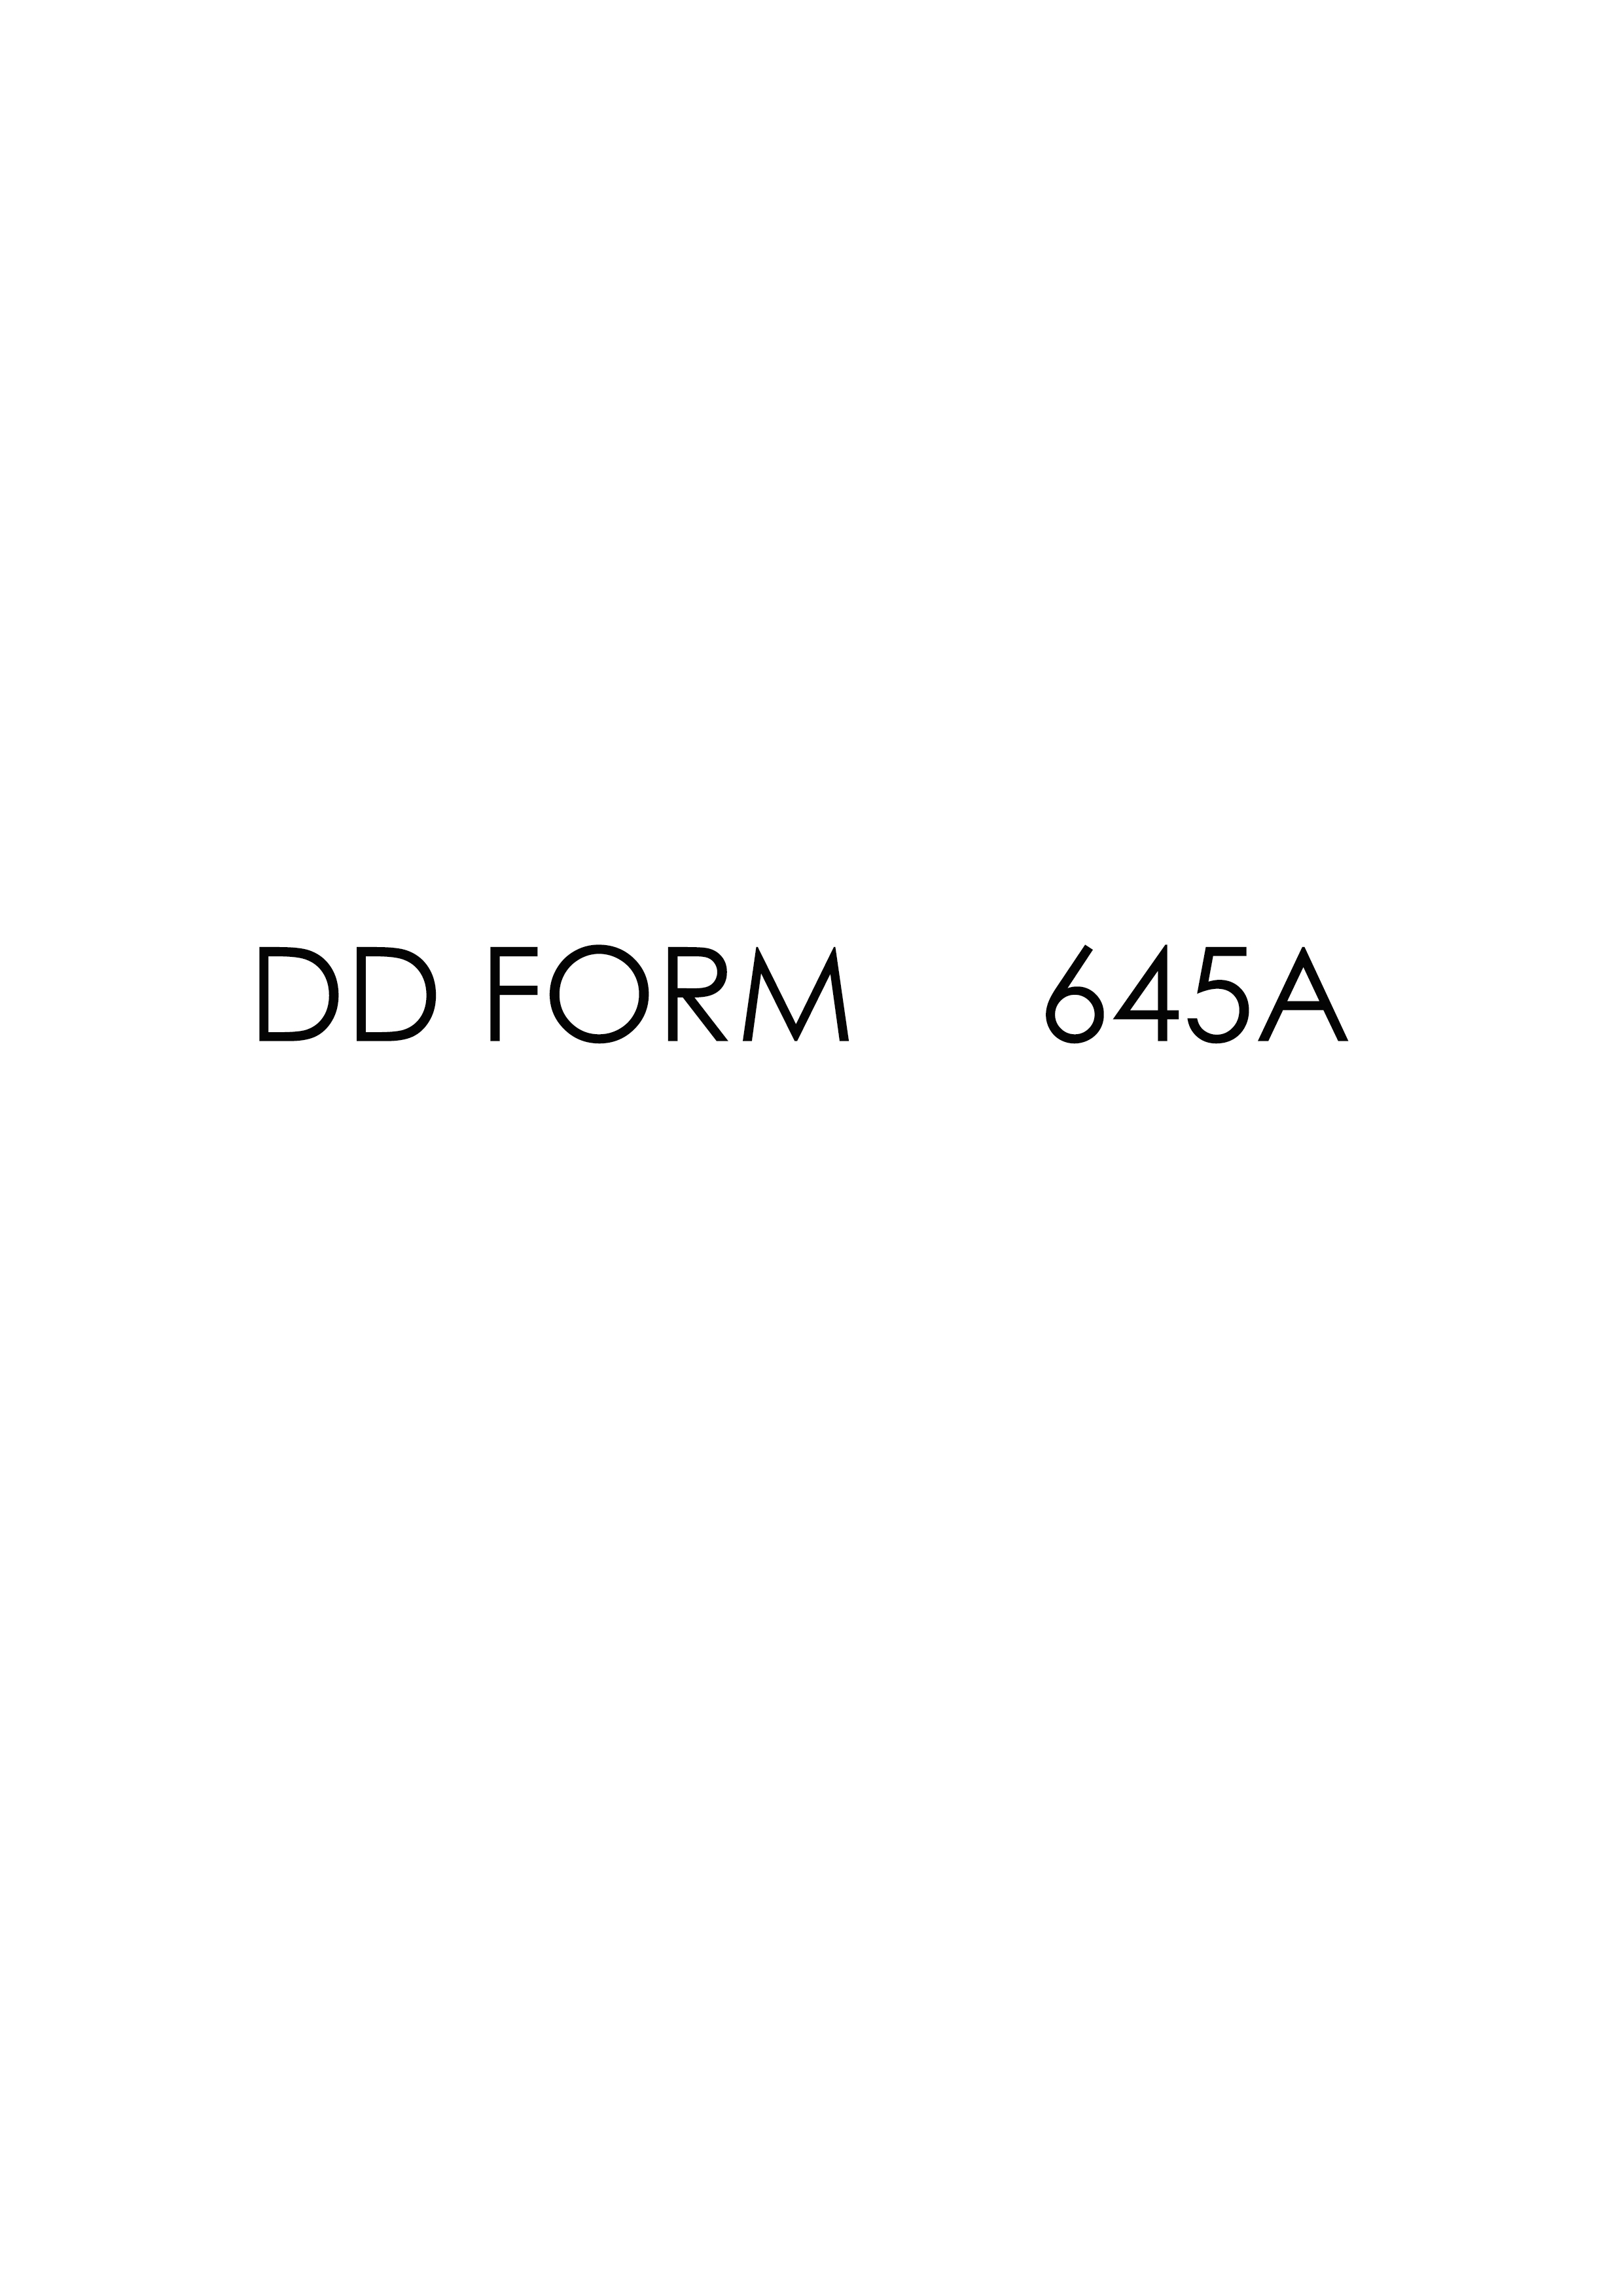 Download dd form 645A